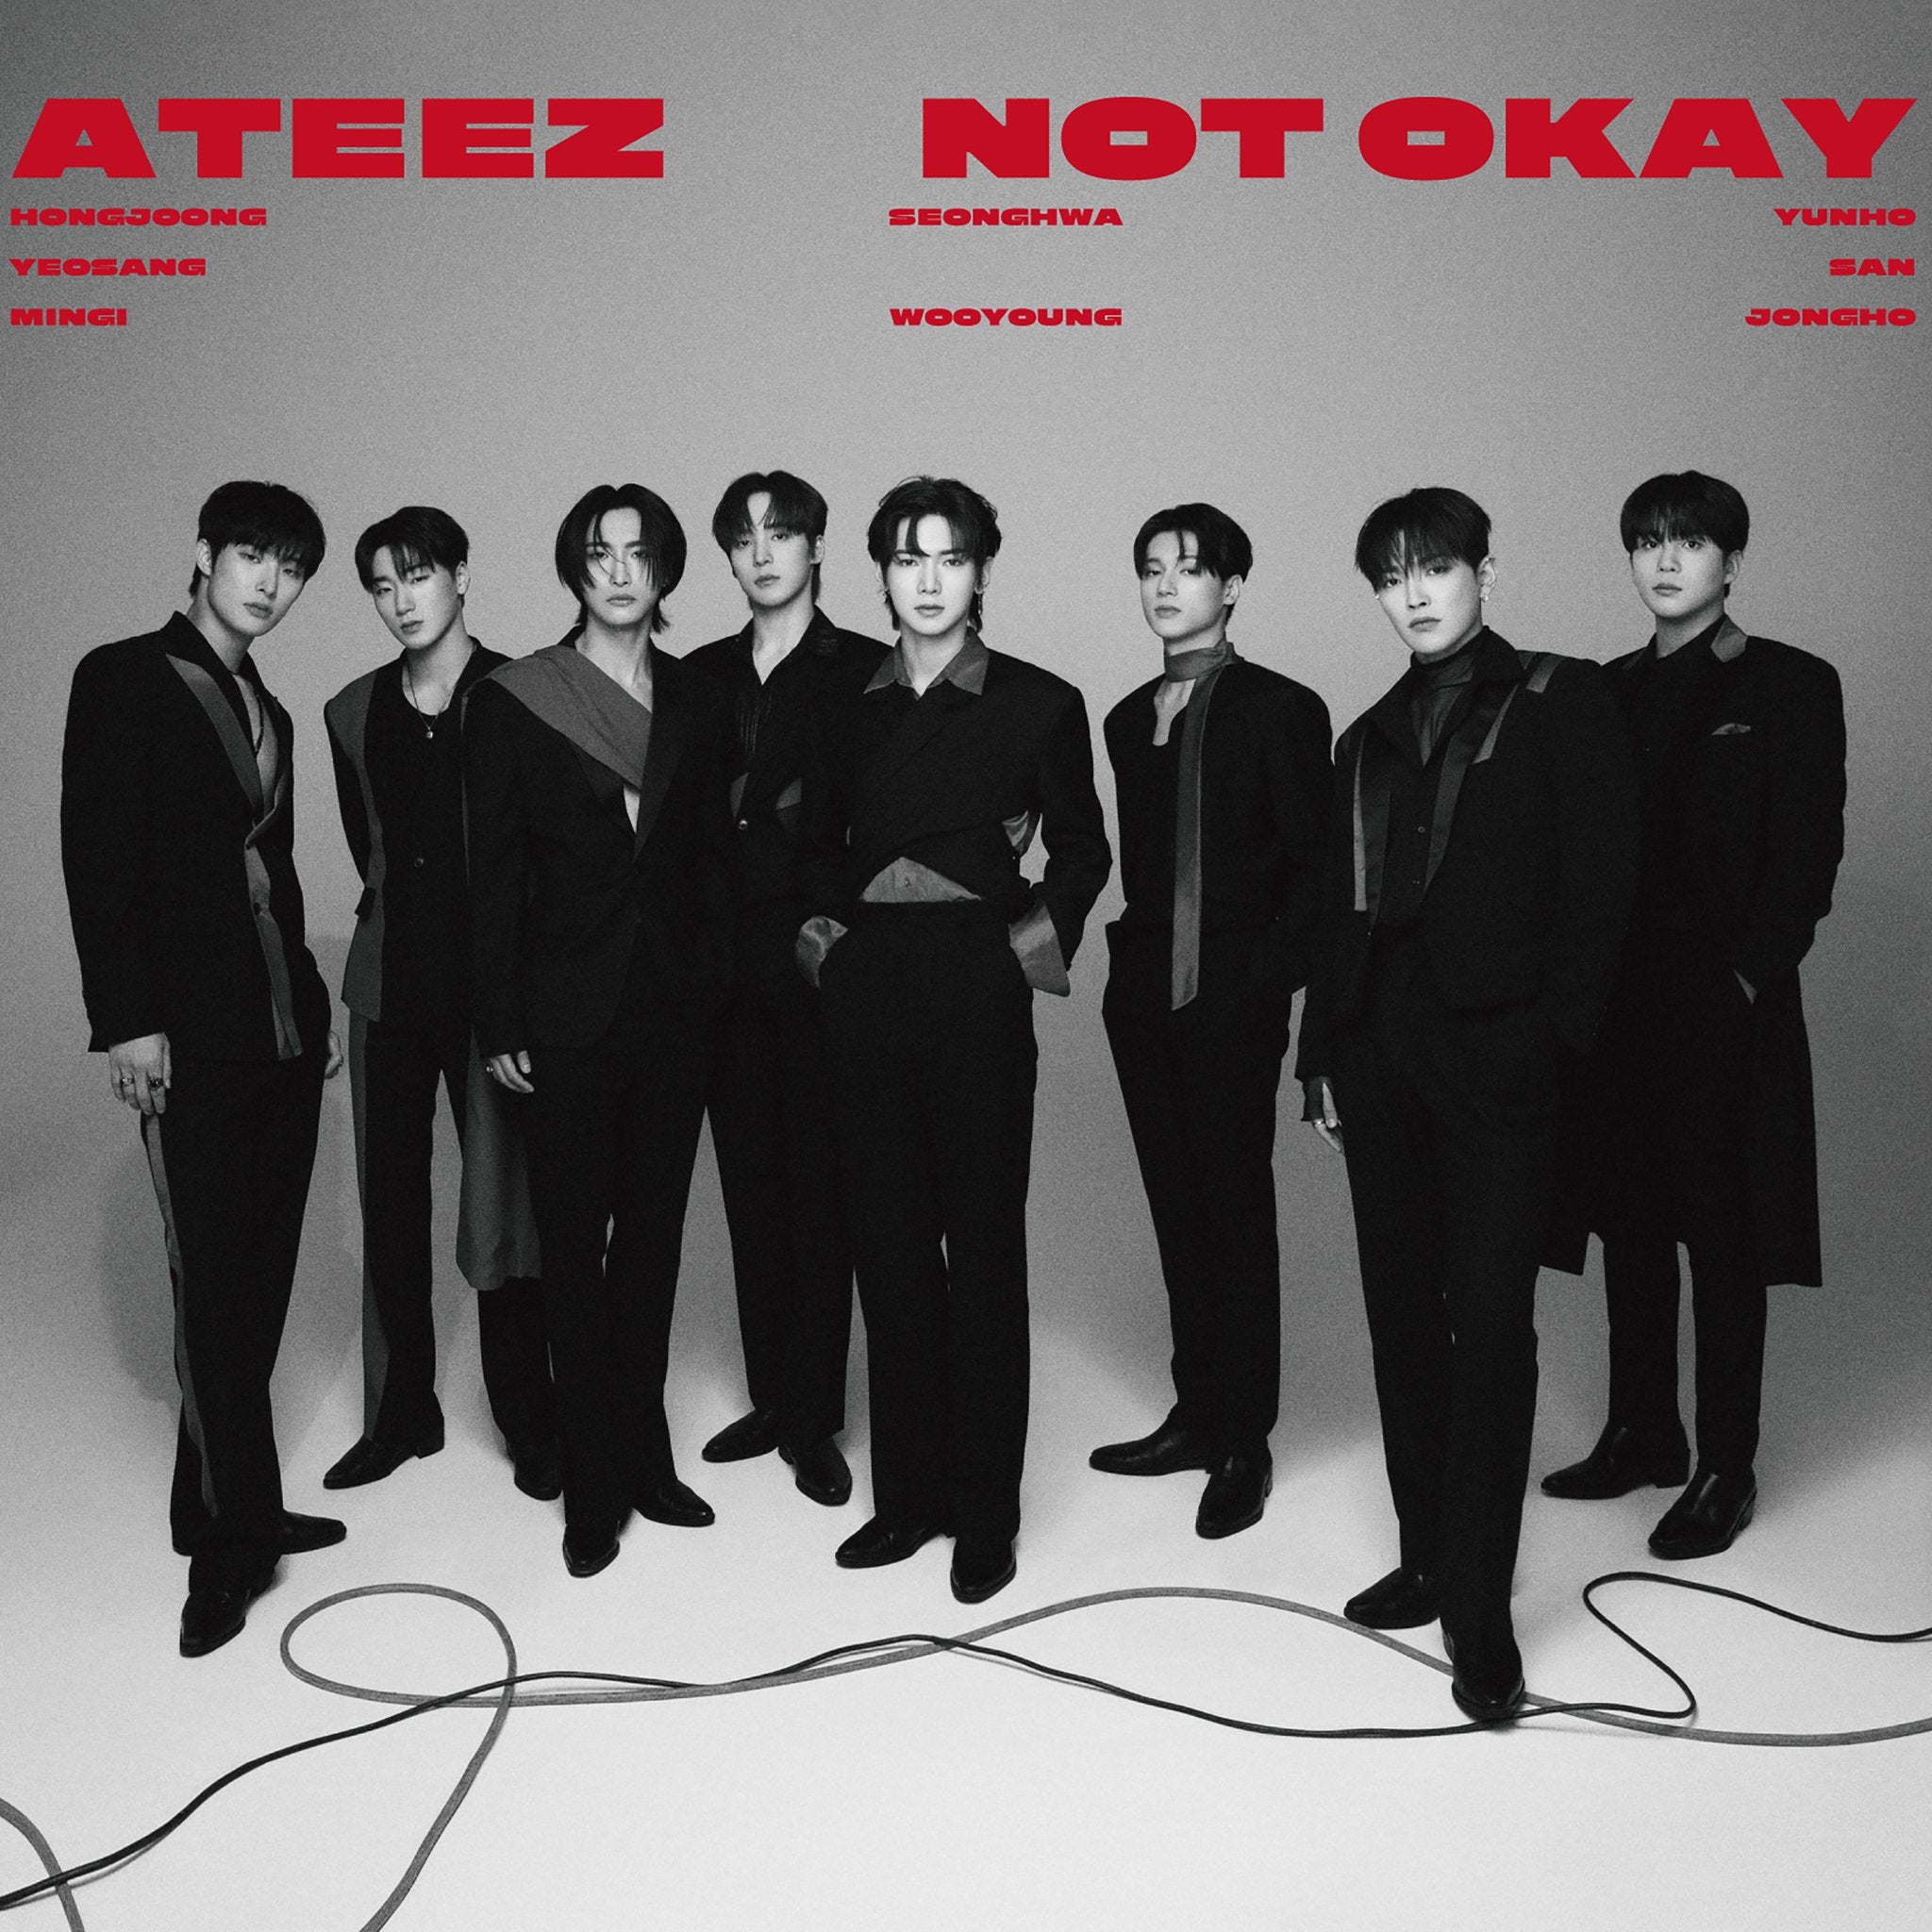 ATEEZ 3RD JAPANESE SINGLE - NOT OKAY